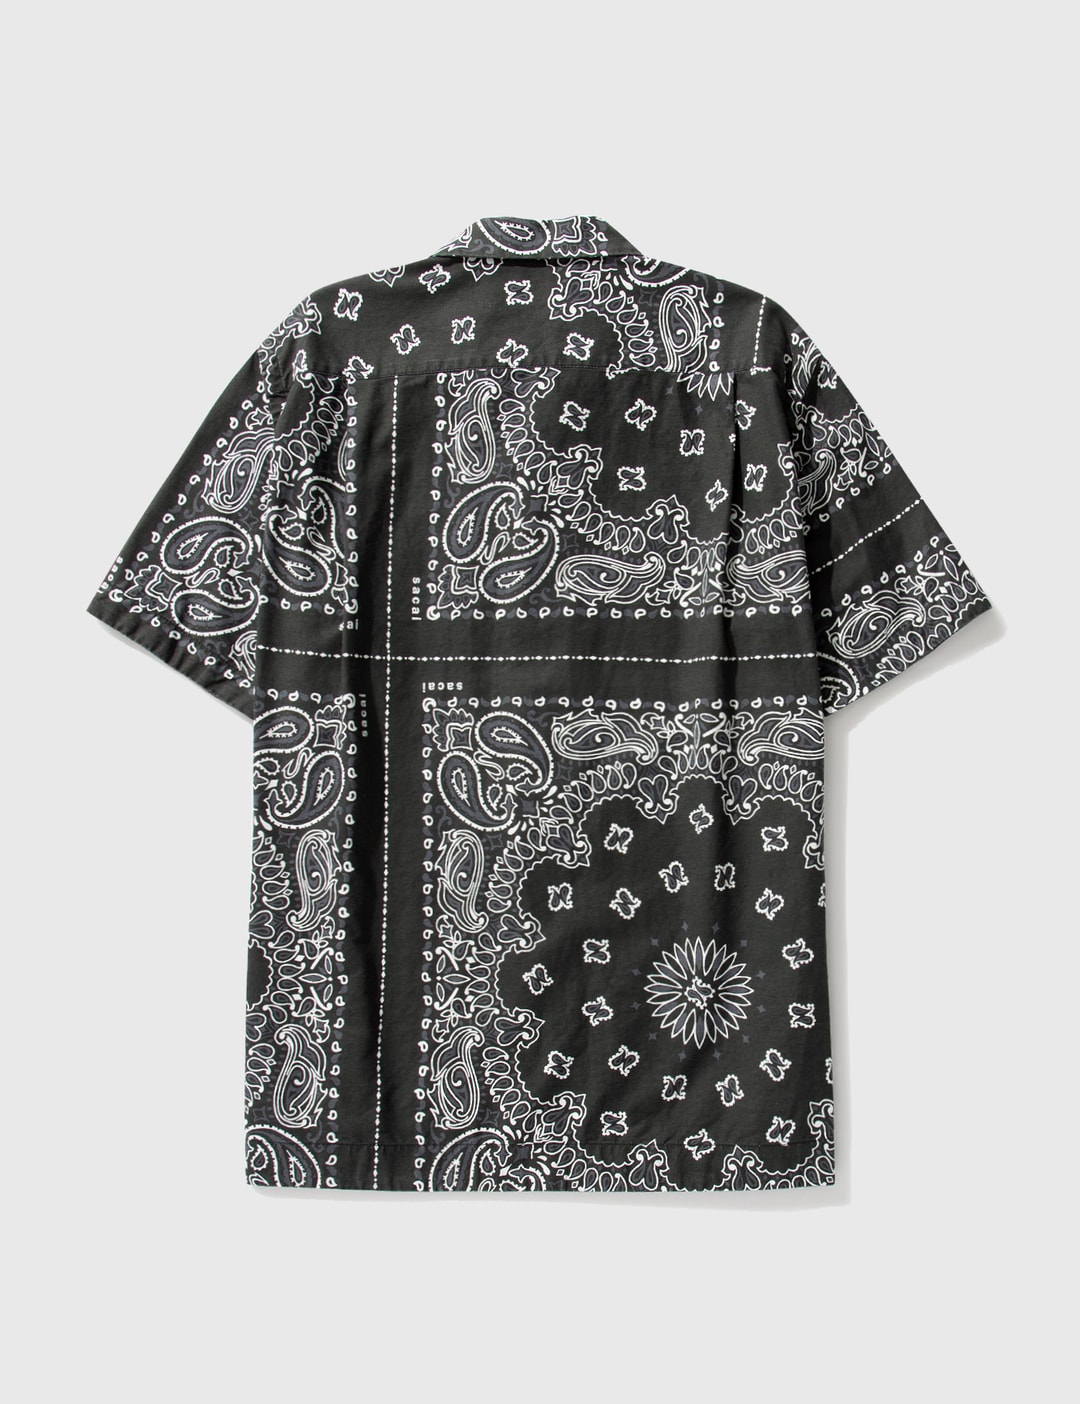 Sacai - Bandana Print Shirt | HBX - Globally Curated Fashion and ...